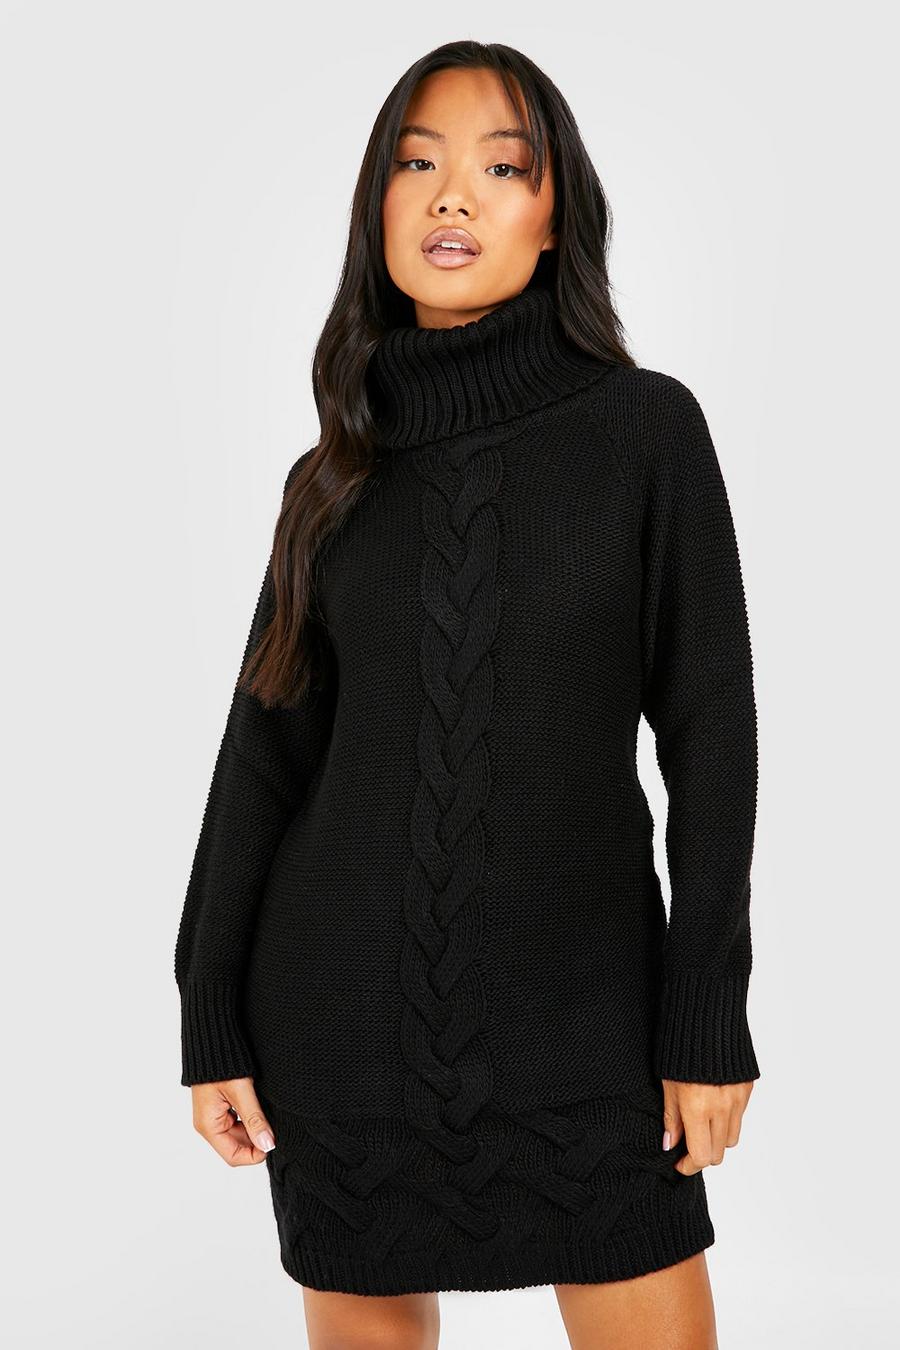 Black Petite Turtleneck Cable Knit Sweater Dress